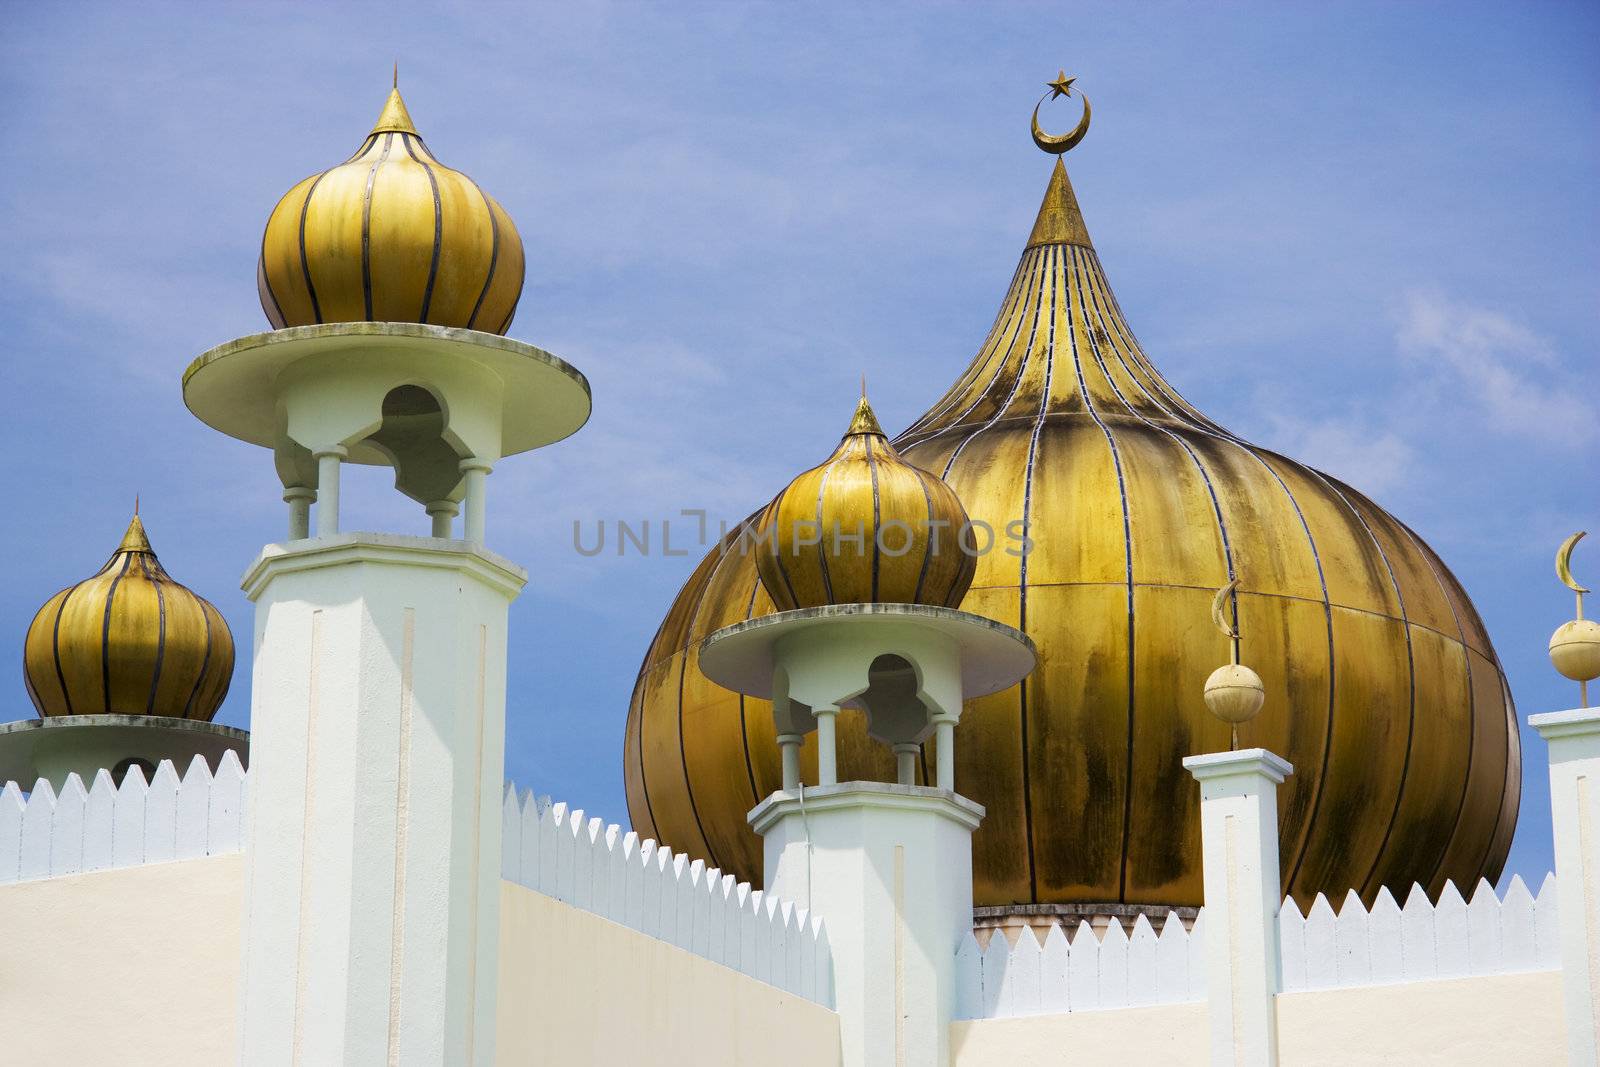 Image of Sultan Ahmad Shah Mosque, located at Pekan, Pahang, Malaysia.